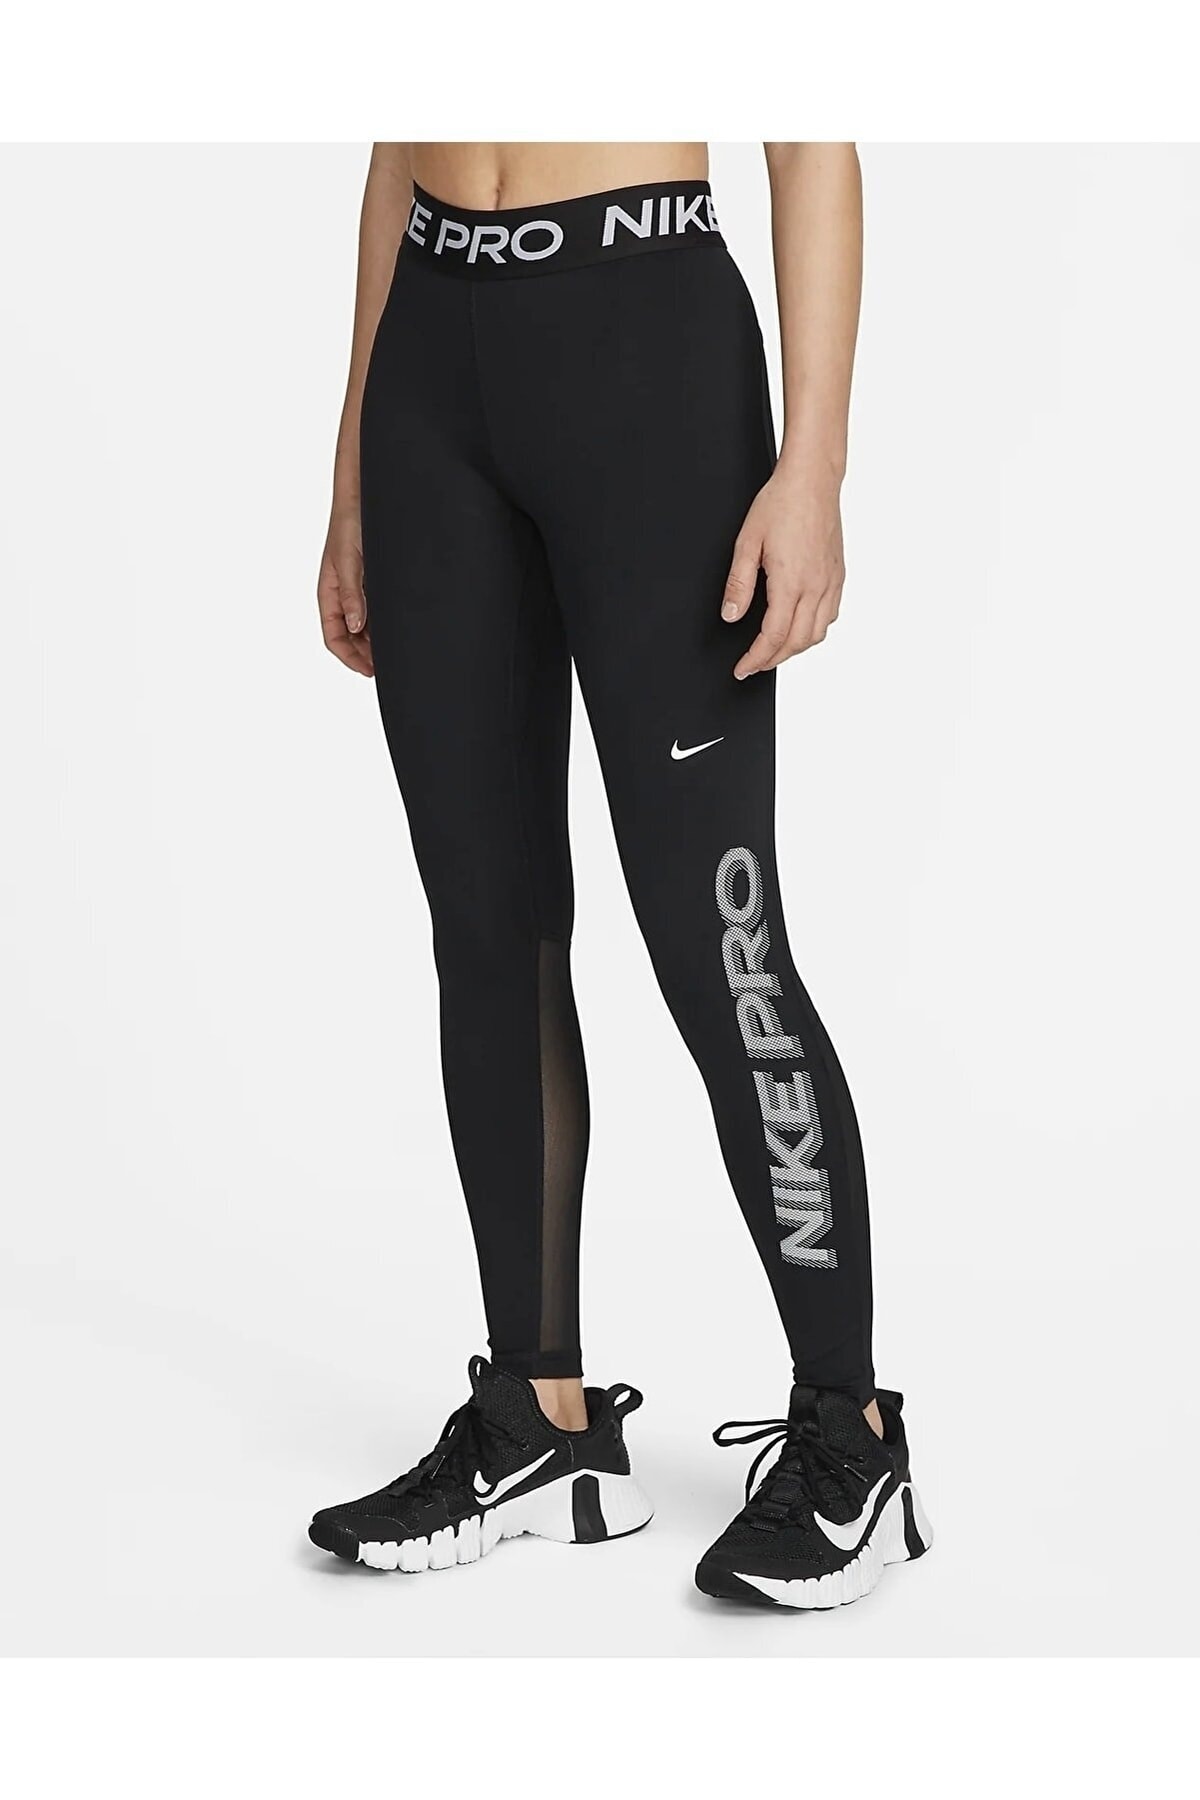 Nike Pro Dri-fit Mid-rise Graphic 7/8 Training Kadın Tayt - Siyah